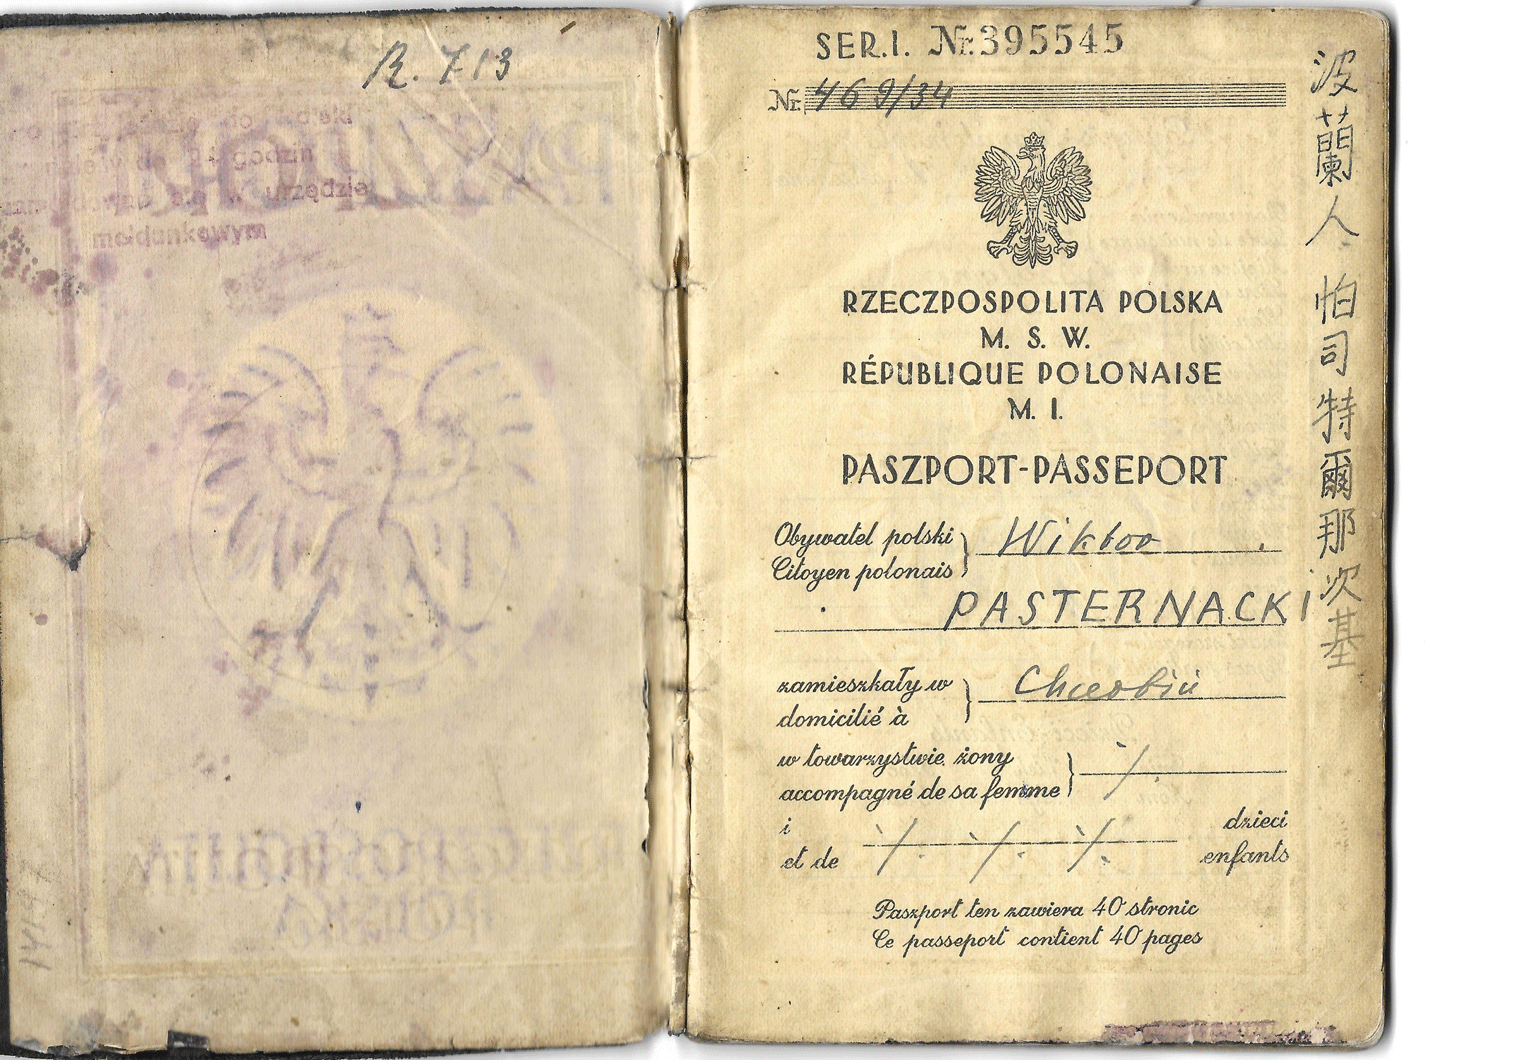 1934 Polish passport from Harbin